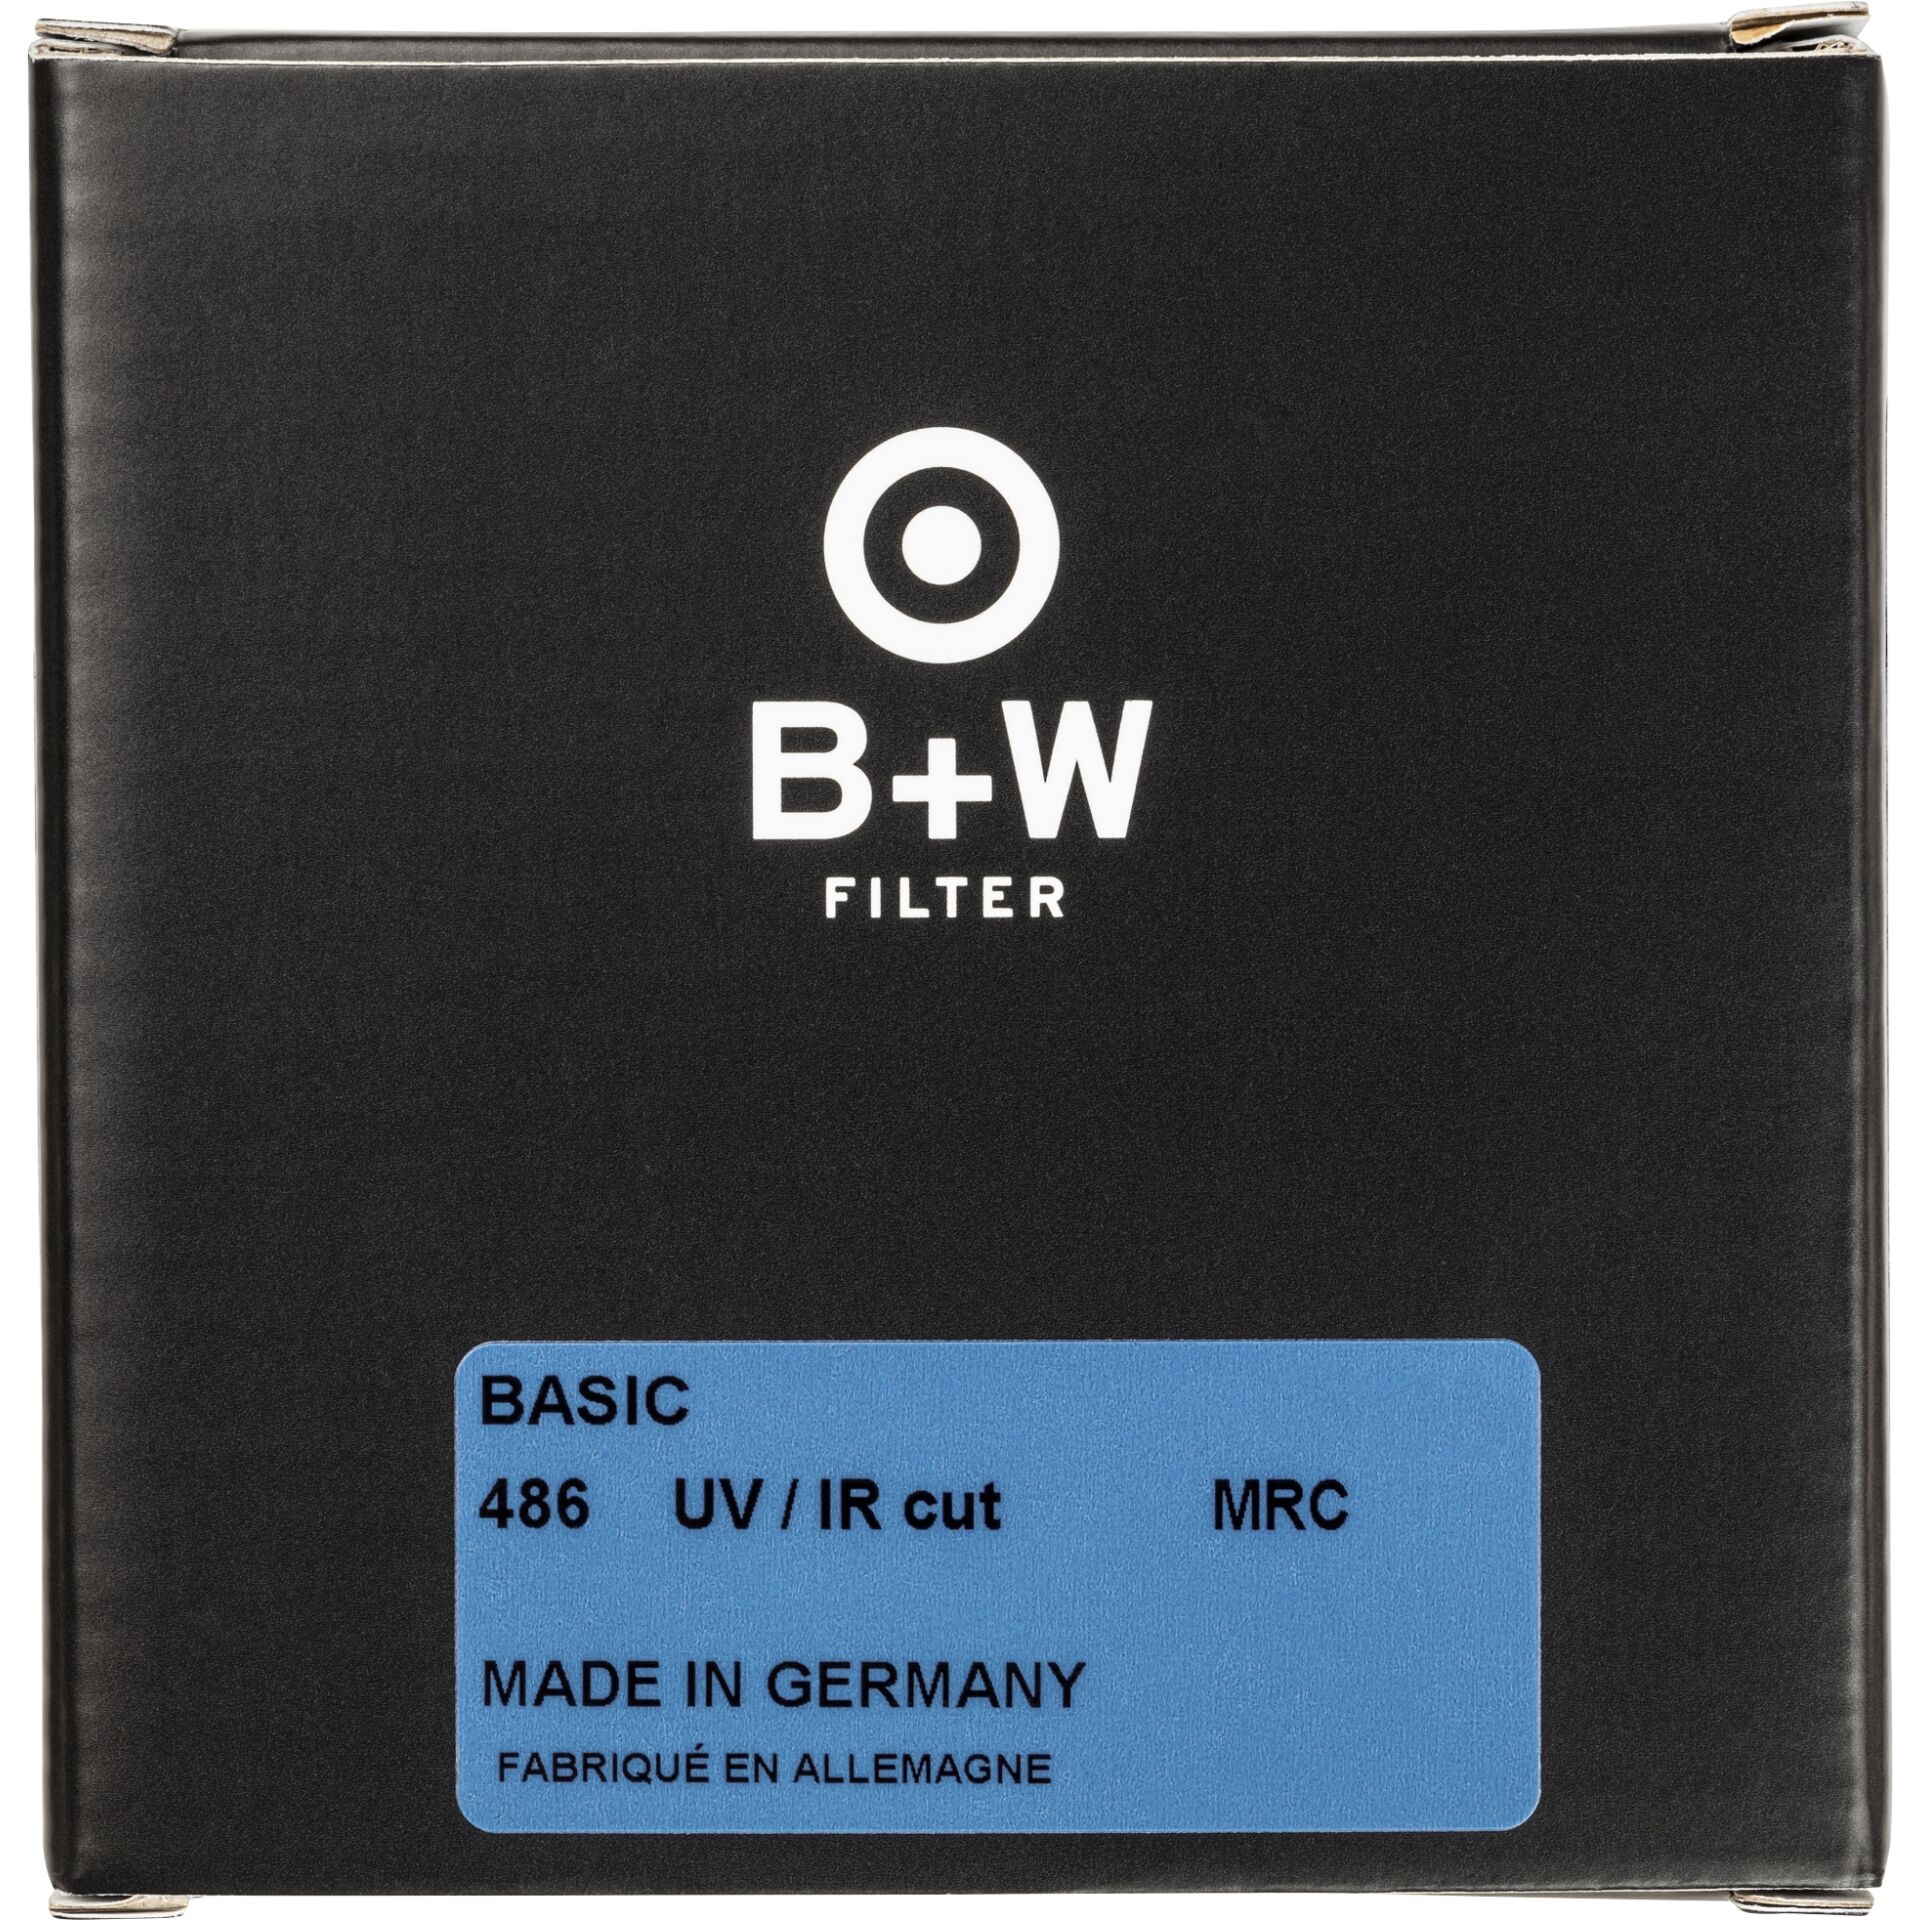 B+W UV-IR CUT 486 MRC BASIC 82mm